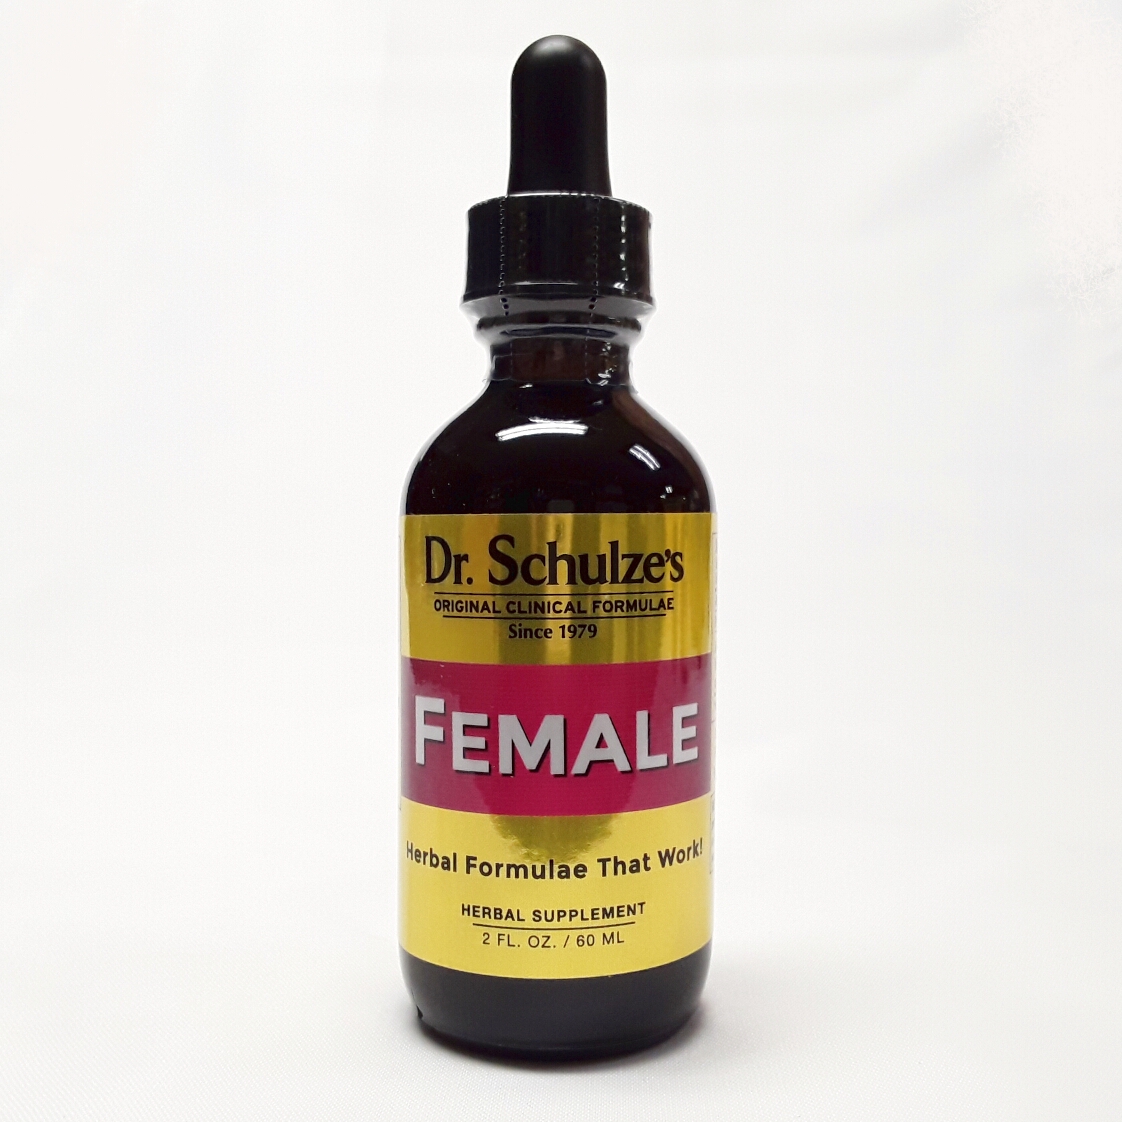 Dr Schulzes Female Formula Website Product Image View 1